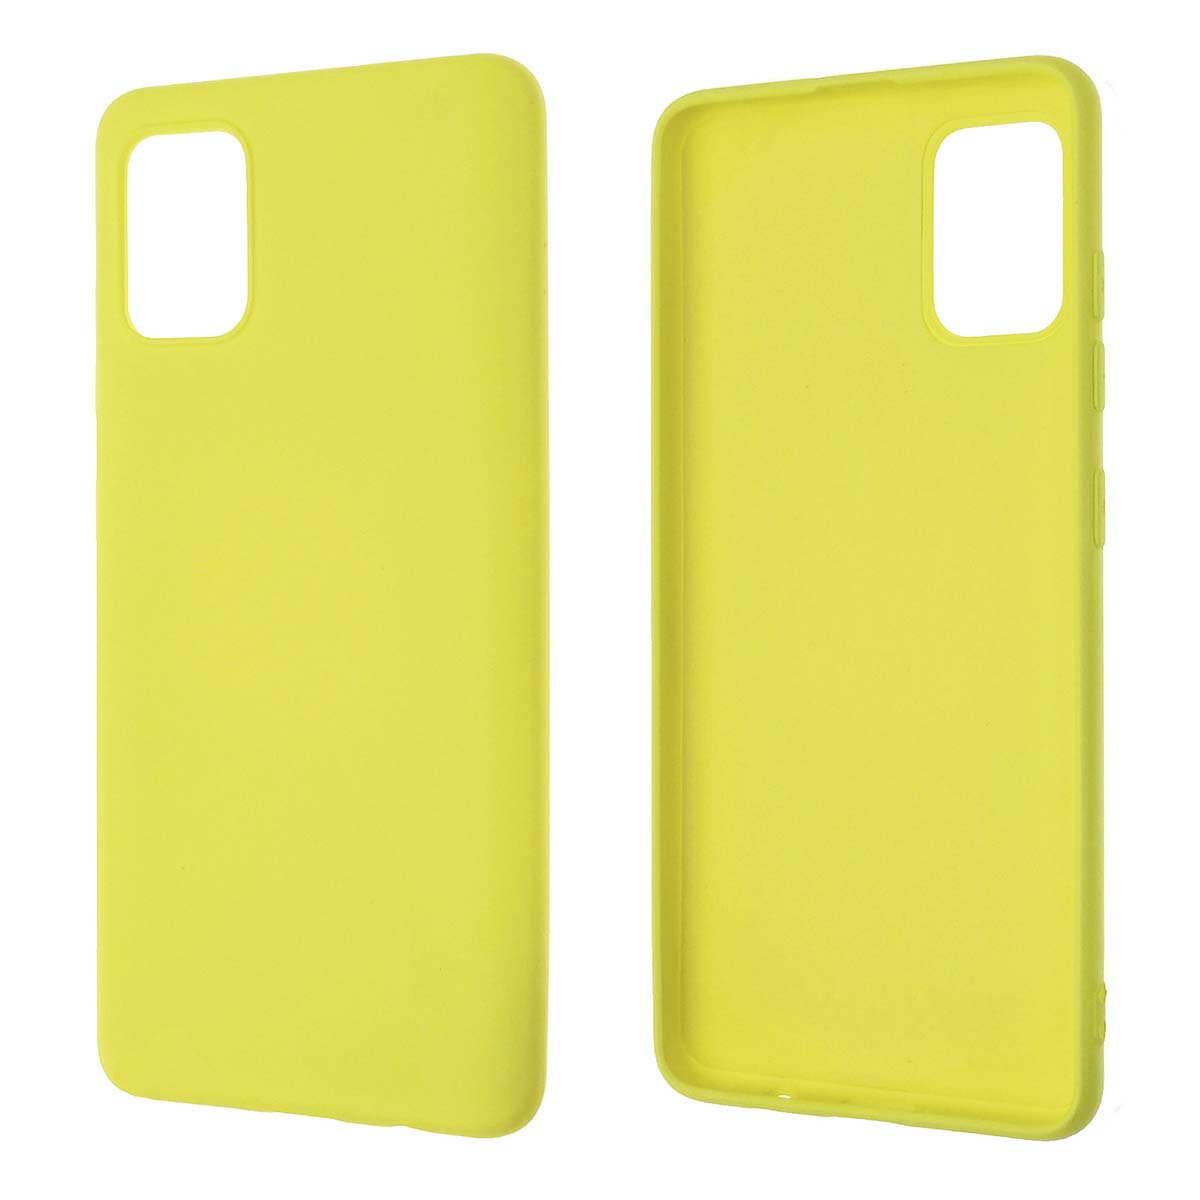 Чехол накладка NANO для SAMSUNG Galaxy A51 (SM-A515), силикон, бархат, цвет желтый